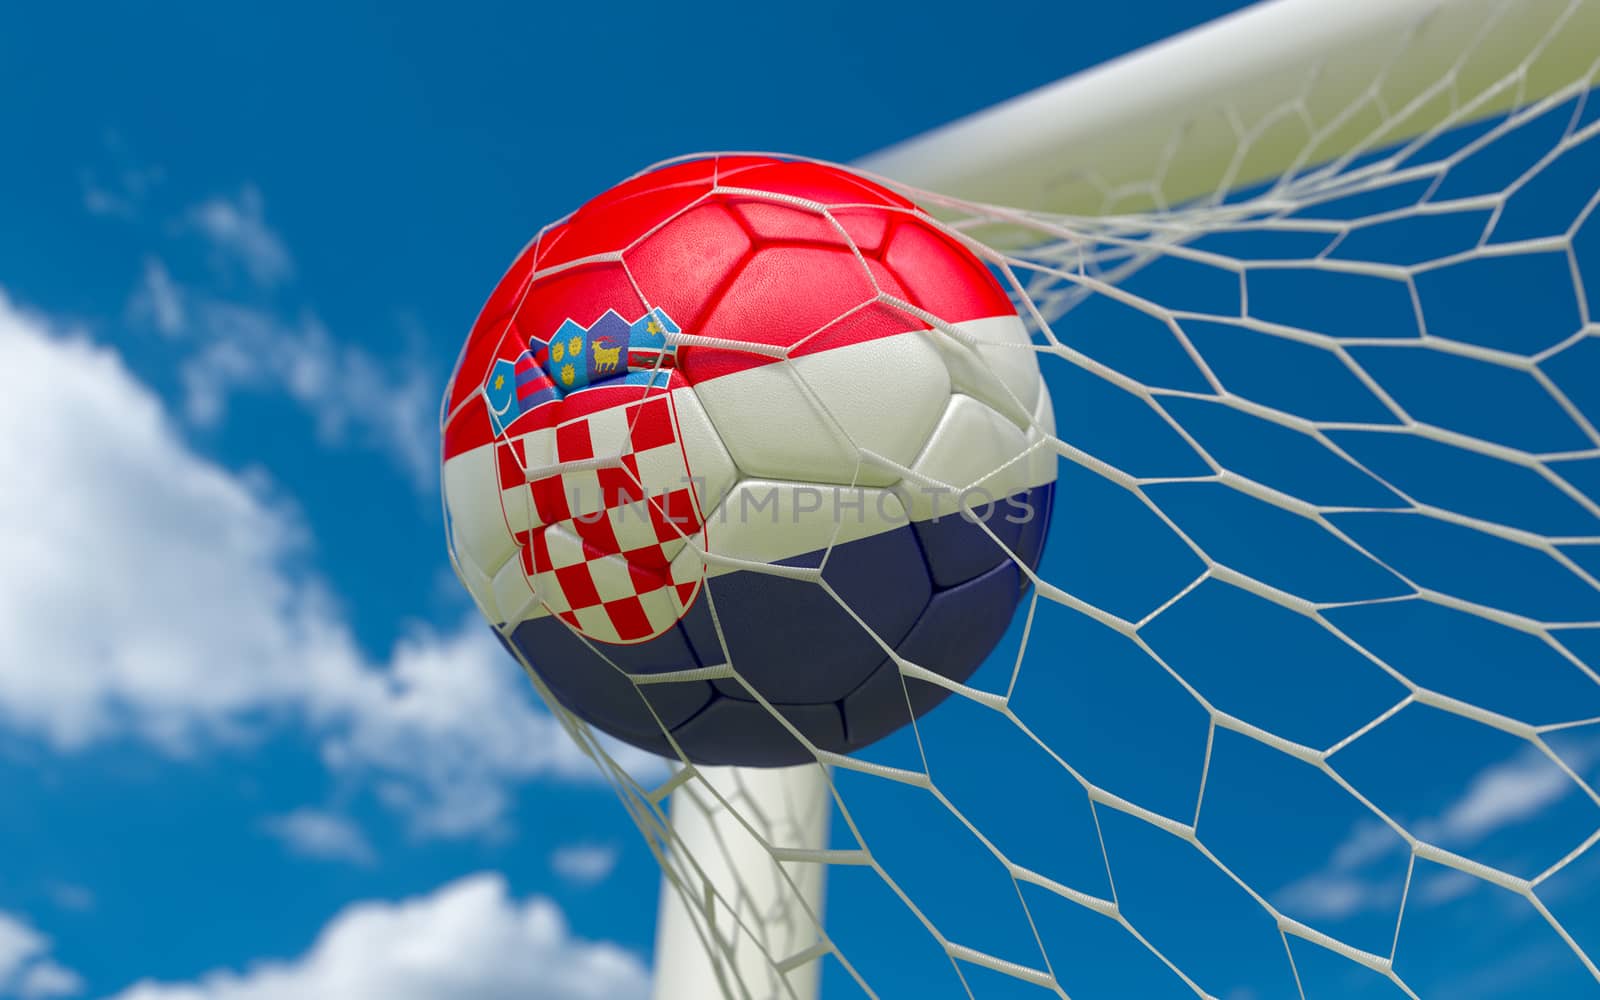 Croatia flag and soccer ball, football in goal net